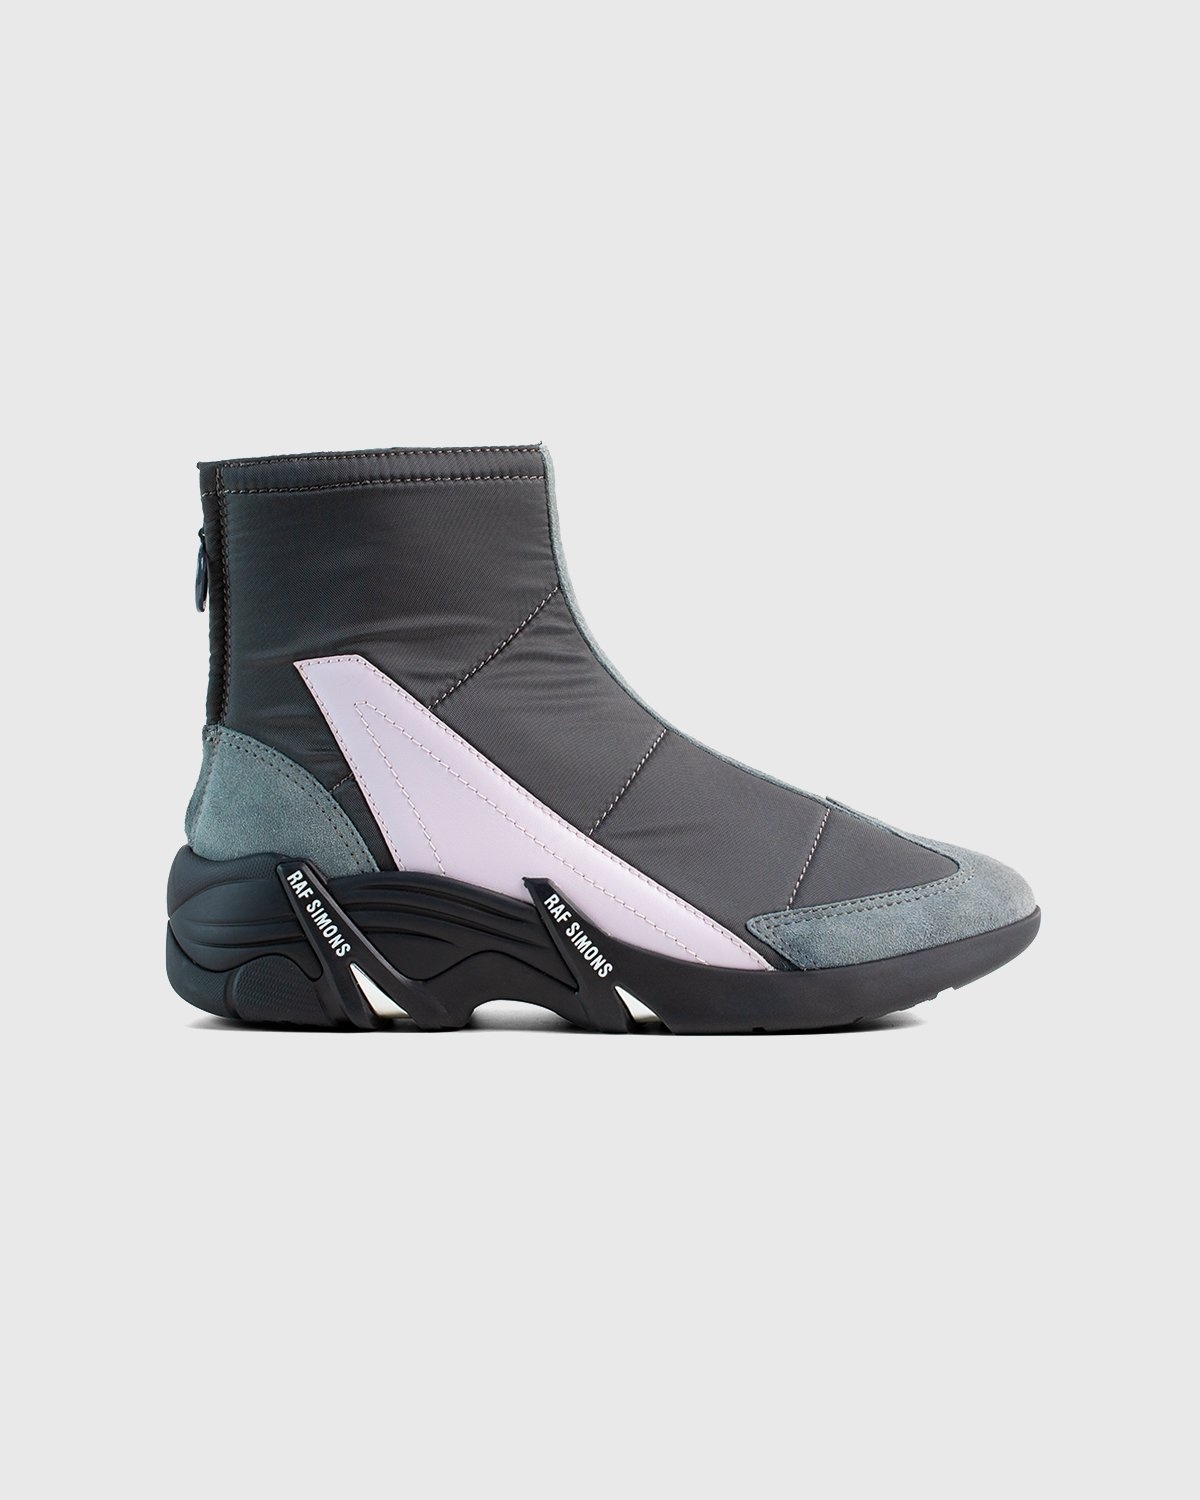 Raf Simons – Cylon 22 Antracite - High Top Sneakers - Grey - Image 1